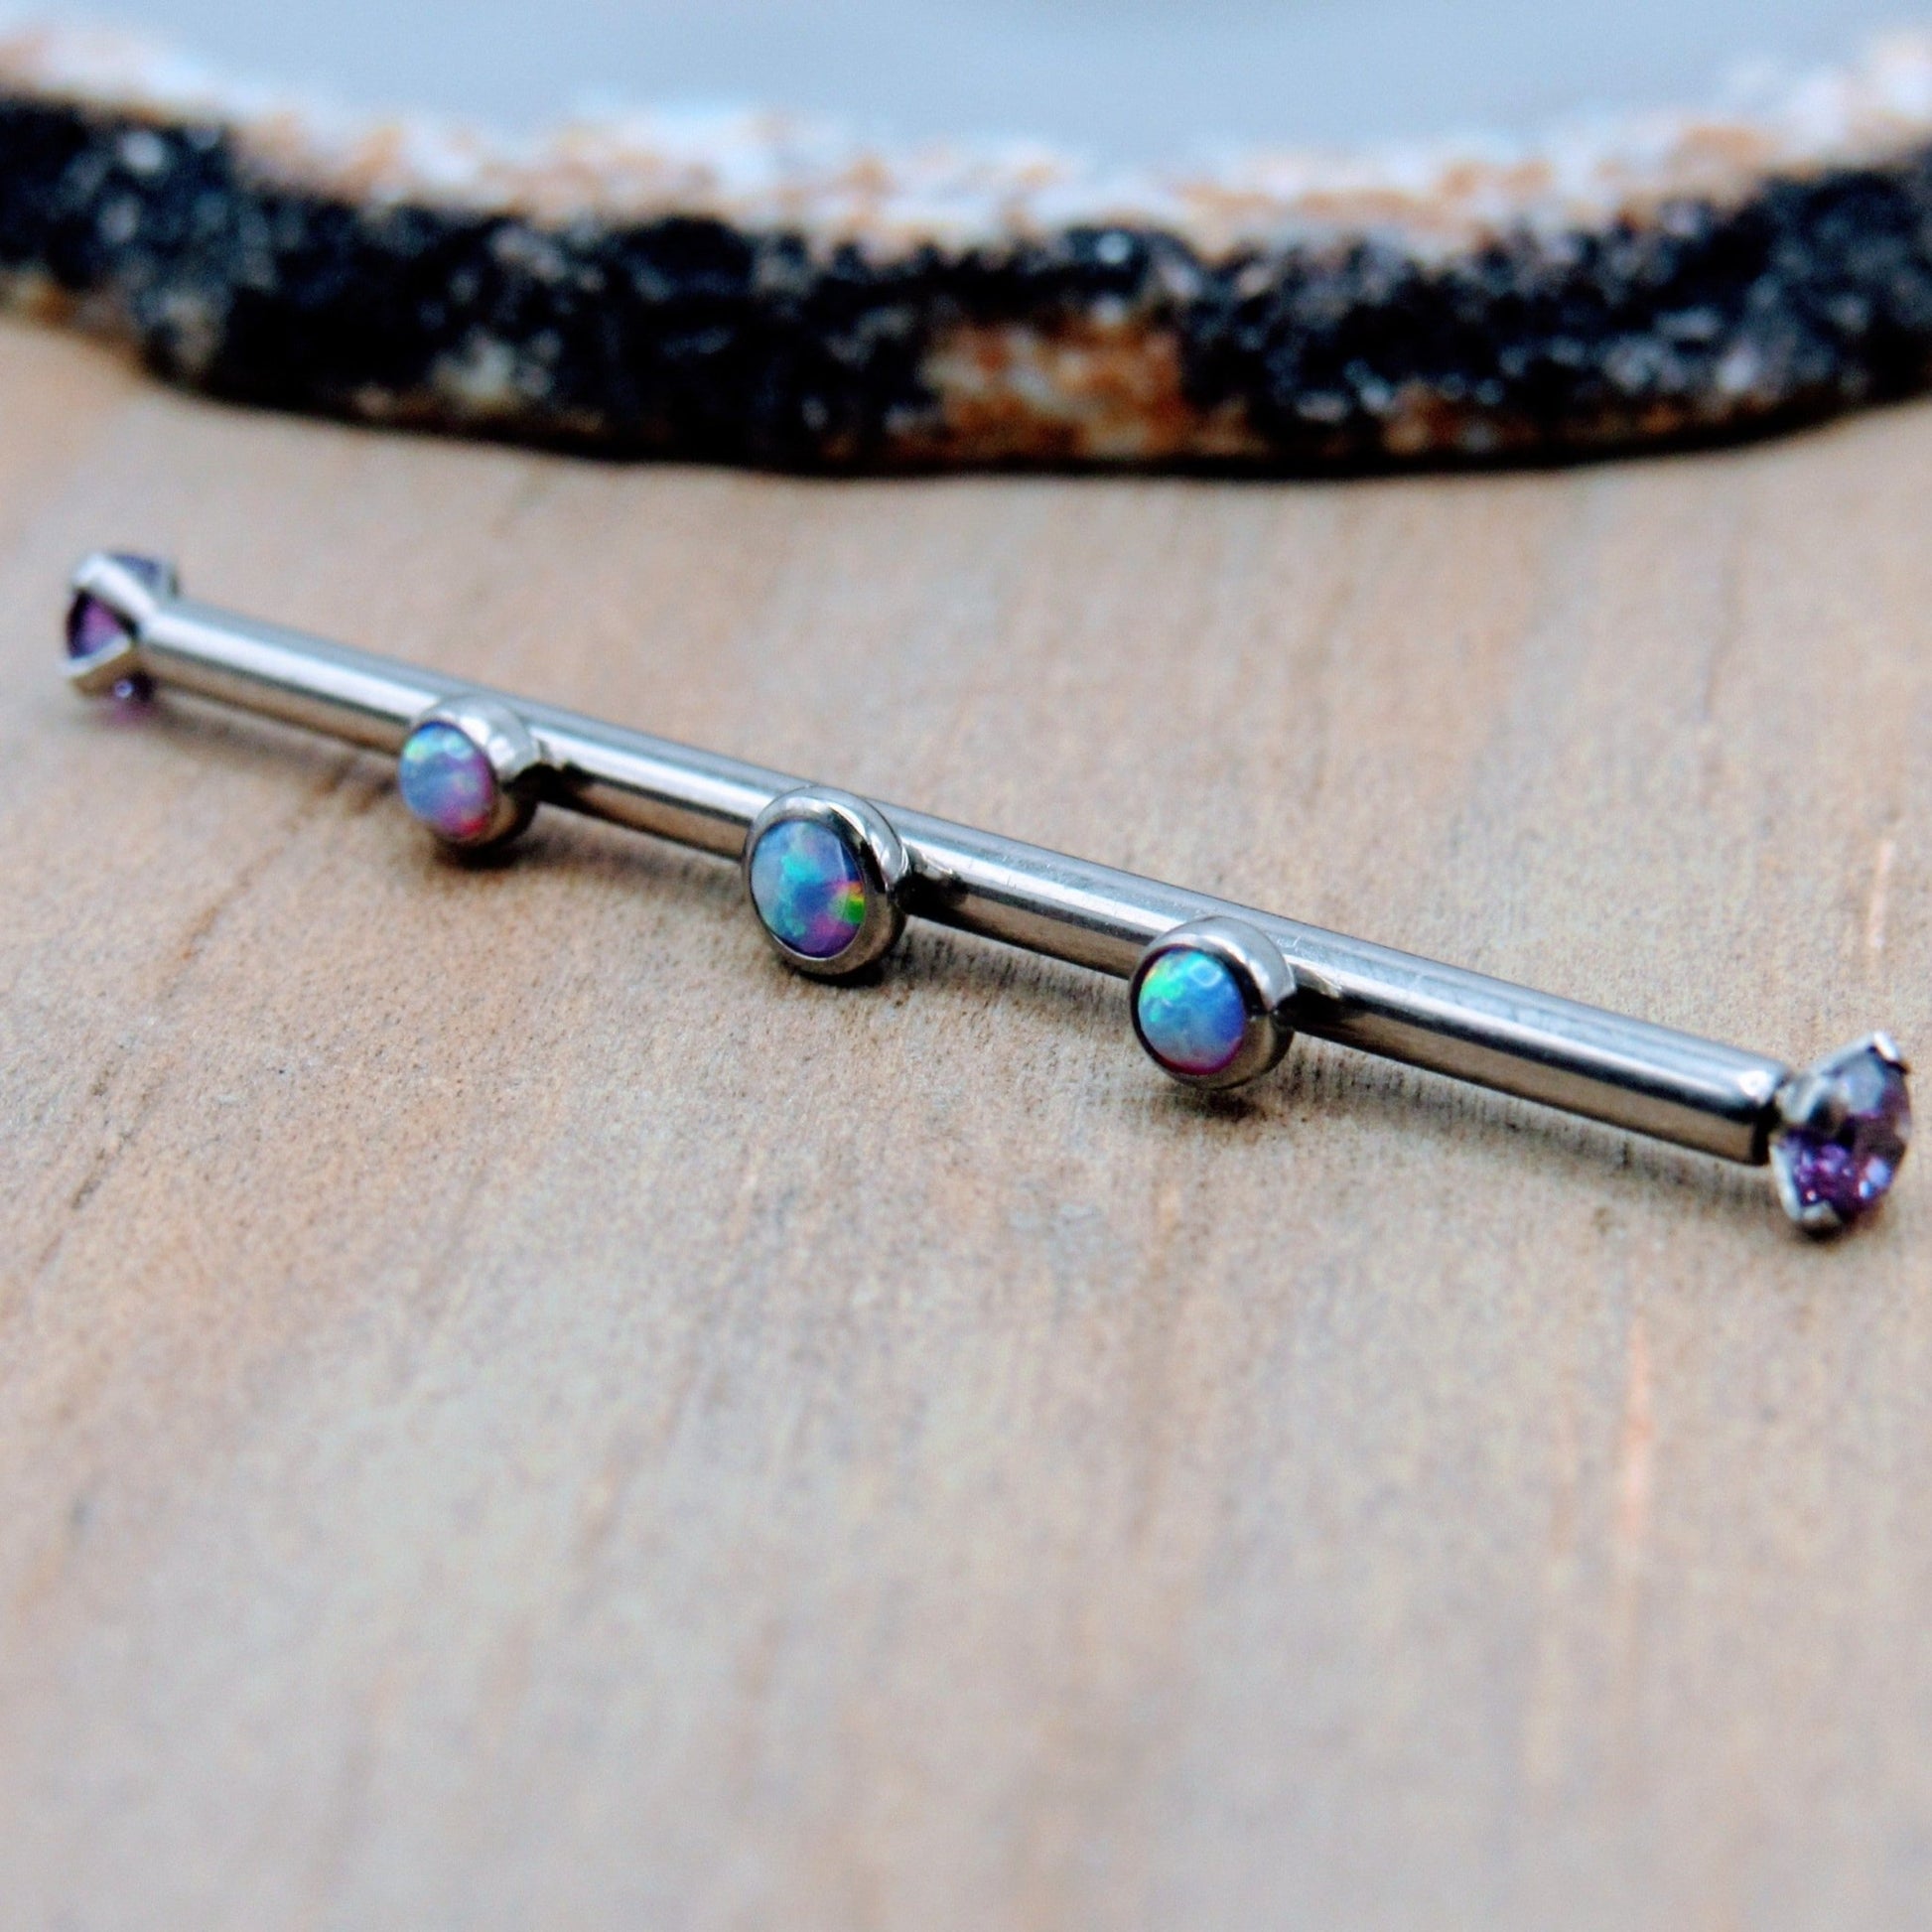 Opal industrial barbell 14g purple opals scaffold piercing barbells titanium internally threaded prong set straight ear bars silver lavender - Siren Body Jewelry